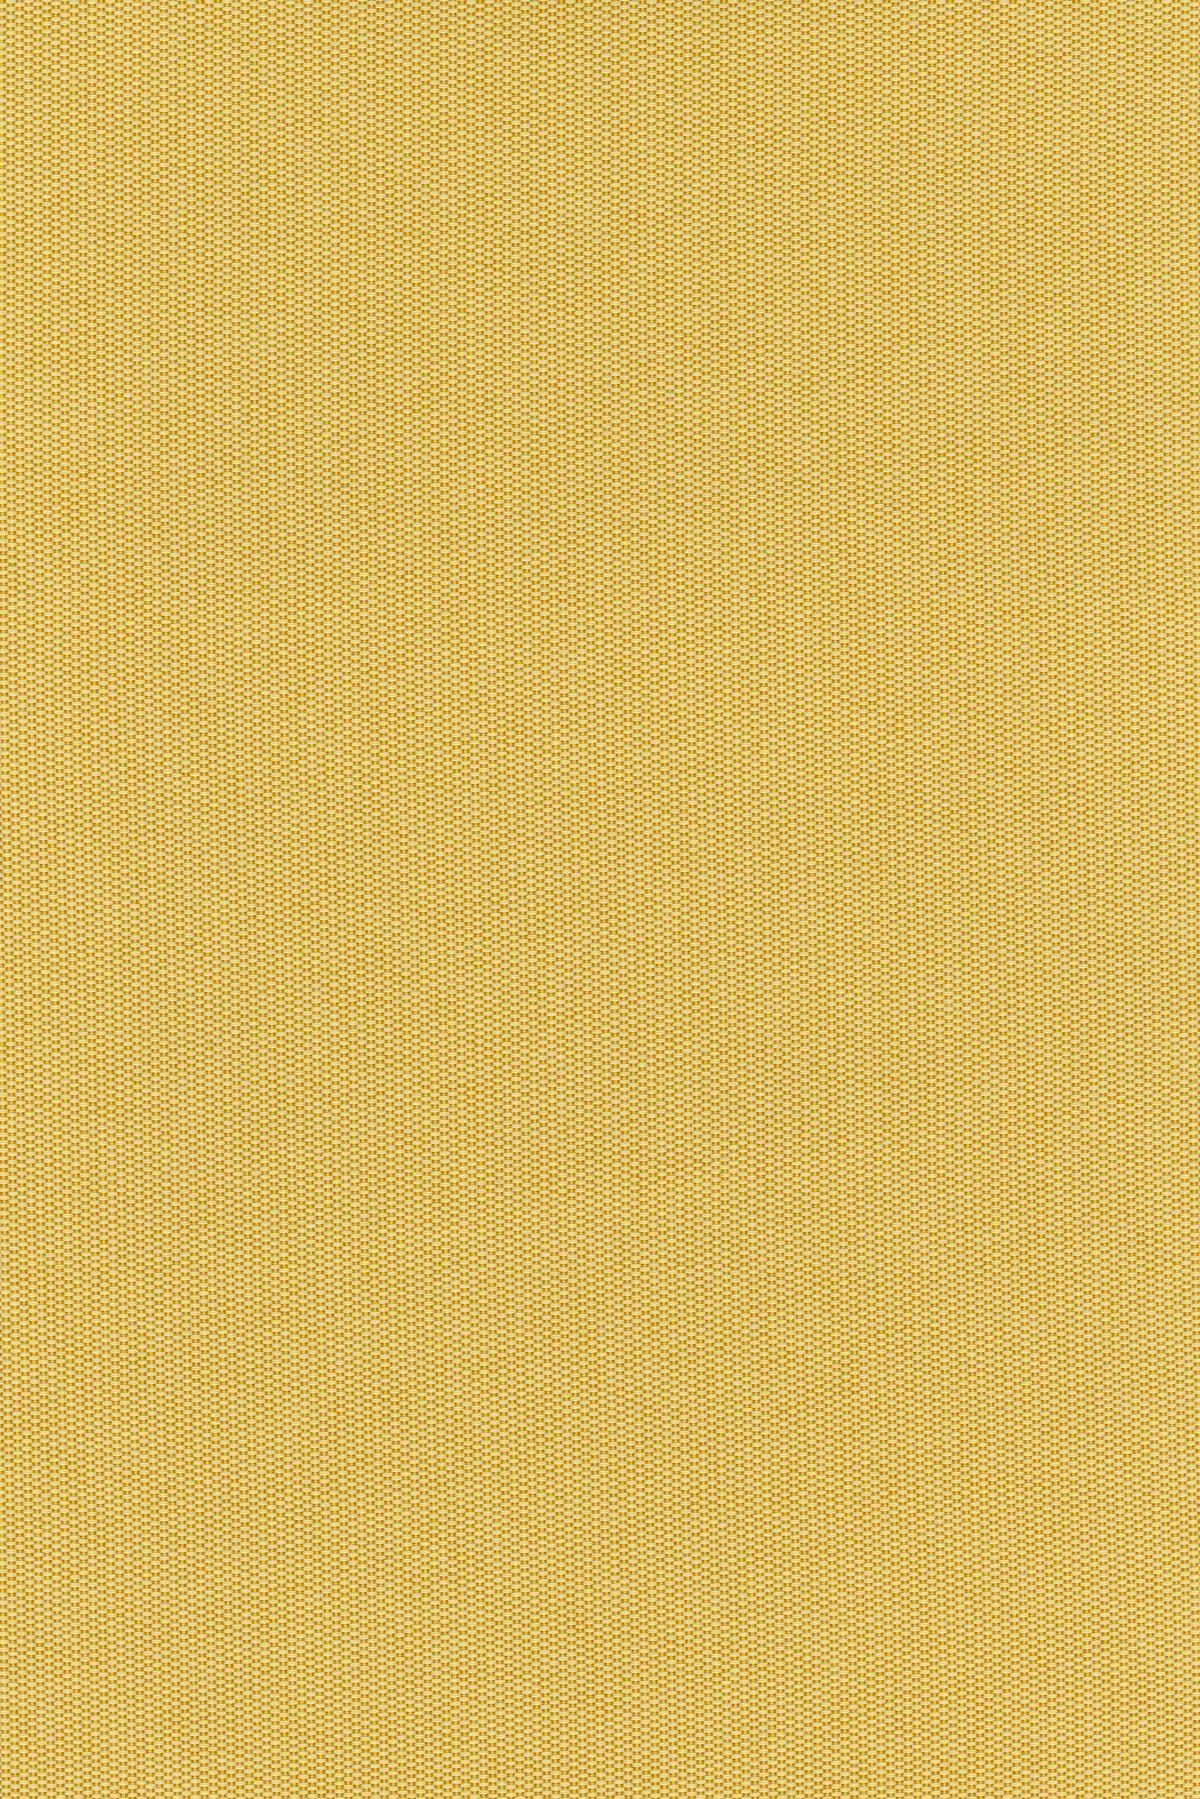 Fabric sample Patio Outdoor 440 yellow